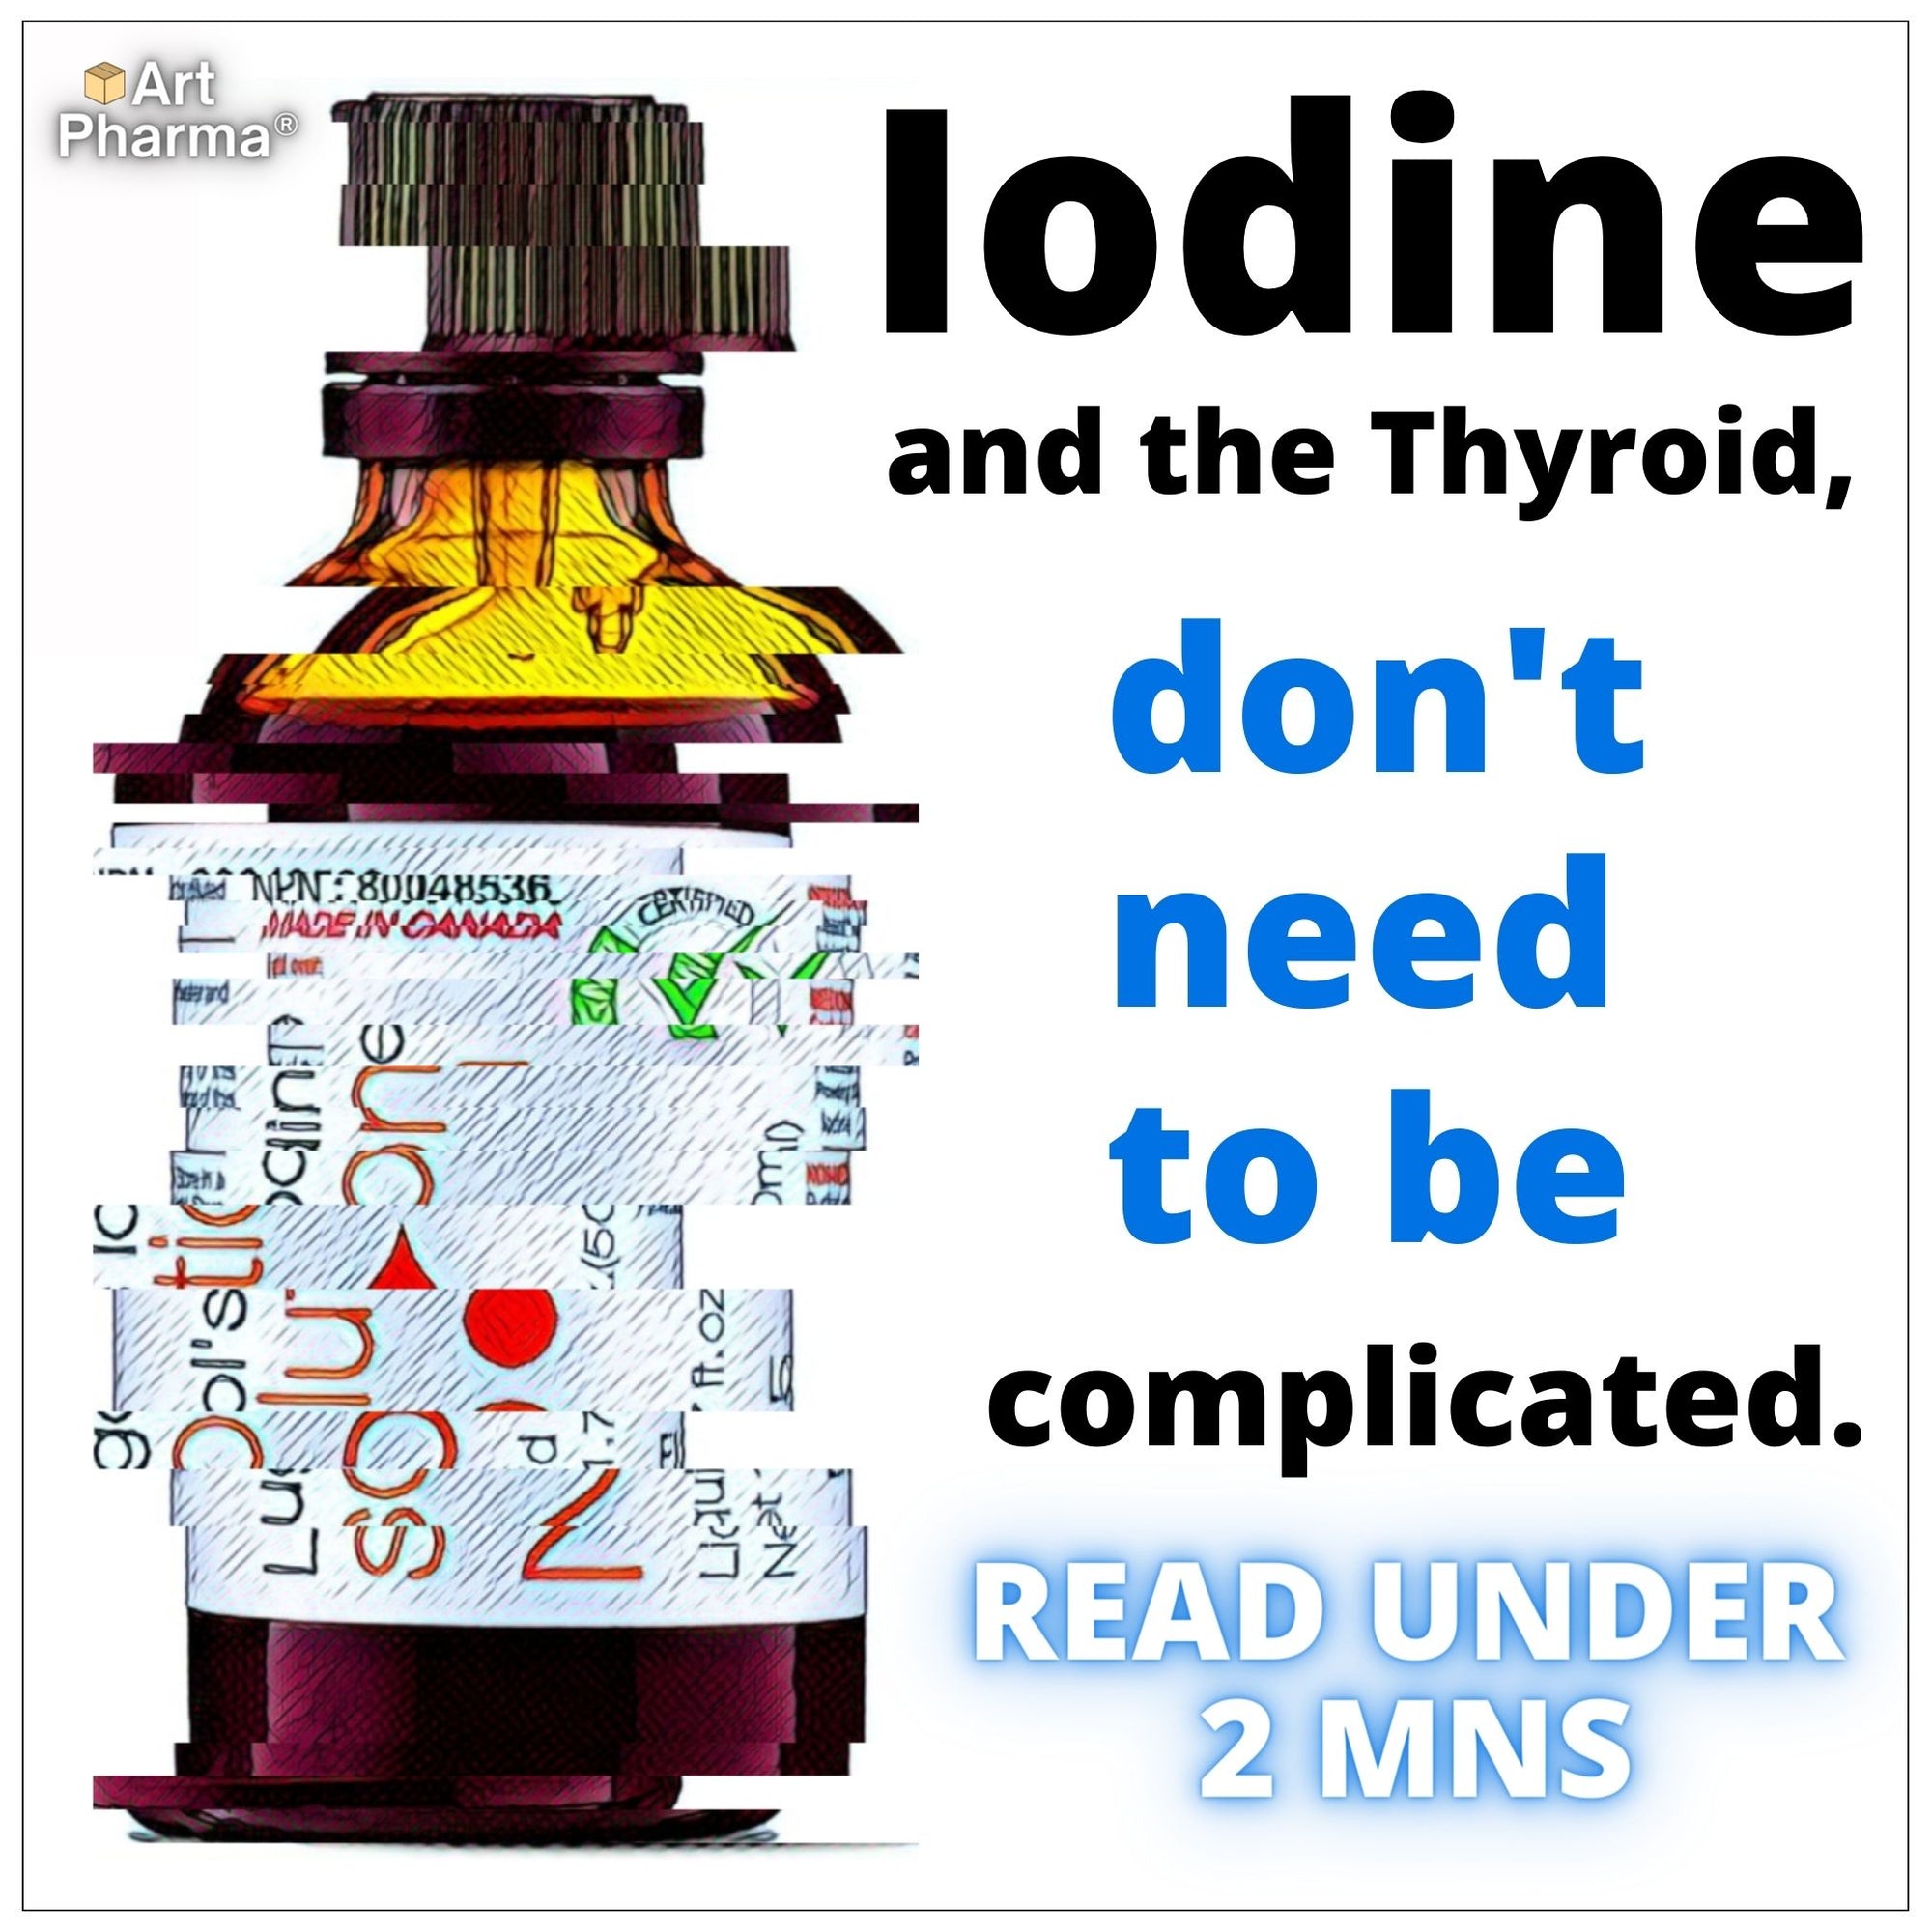 Art Pharma Article Iodine and Lugol's Your Base